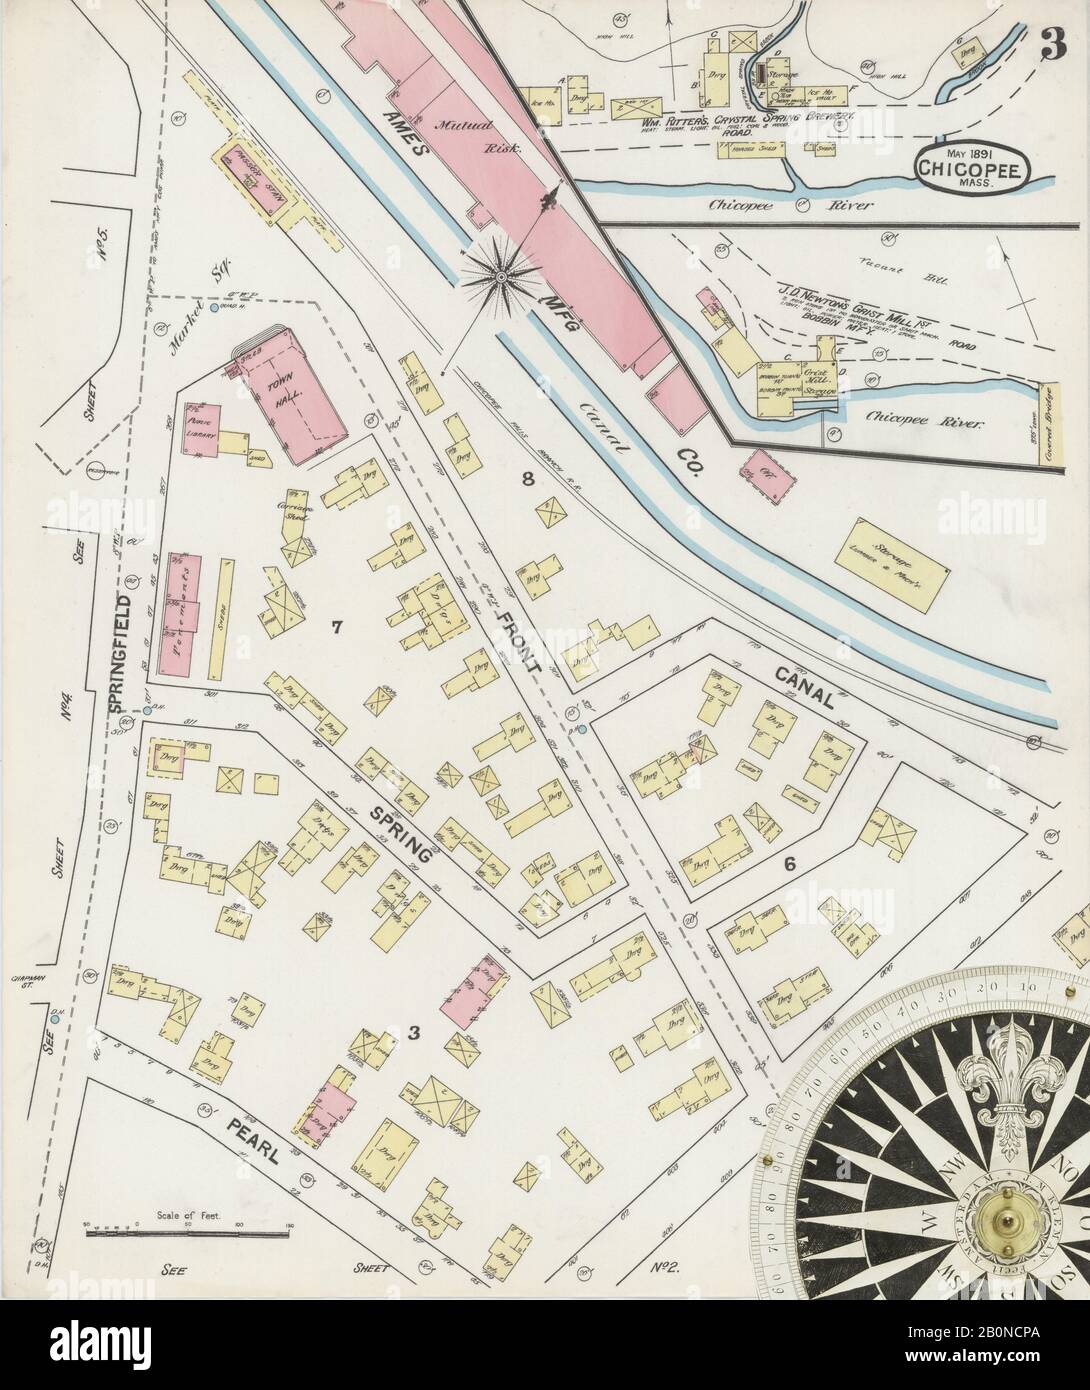 Bild 3 von Sanborn Fire Insurance Map aus Chicopee, Hampden County, Massachusetts. Mai 1891. 8 Blatt(e), Amerika, Straßenkarte mit einem Kompass Aus Dem 19. Jahrhundert Stockfoto